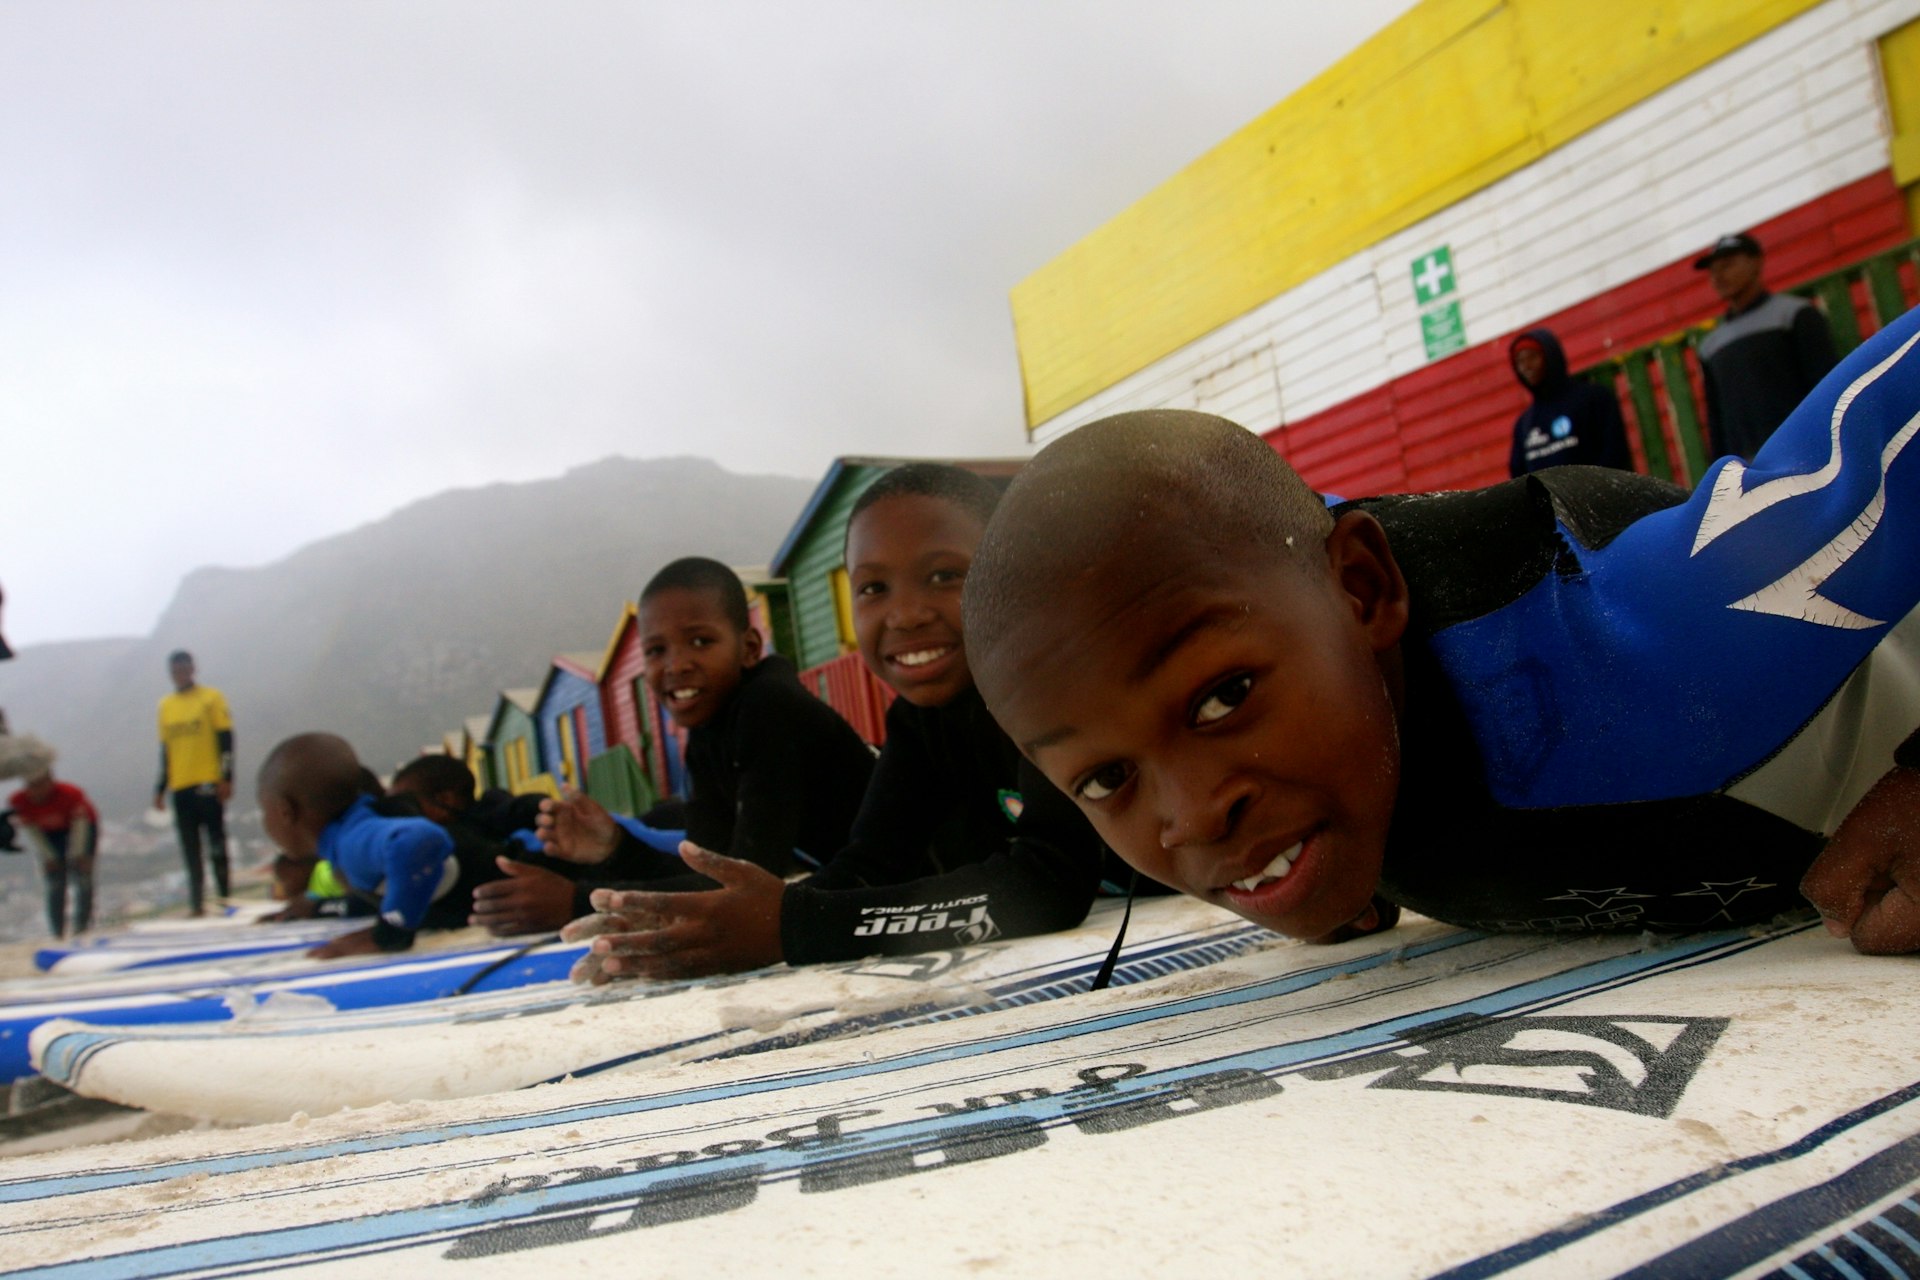 Washing away apartheid’s toxic legacy with surf